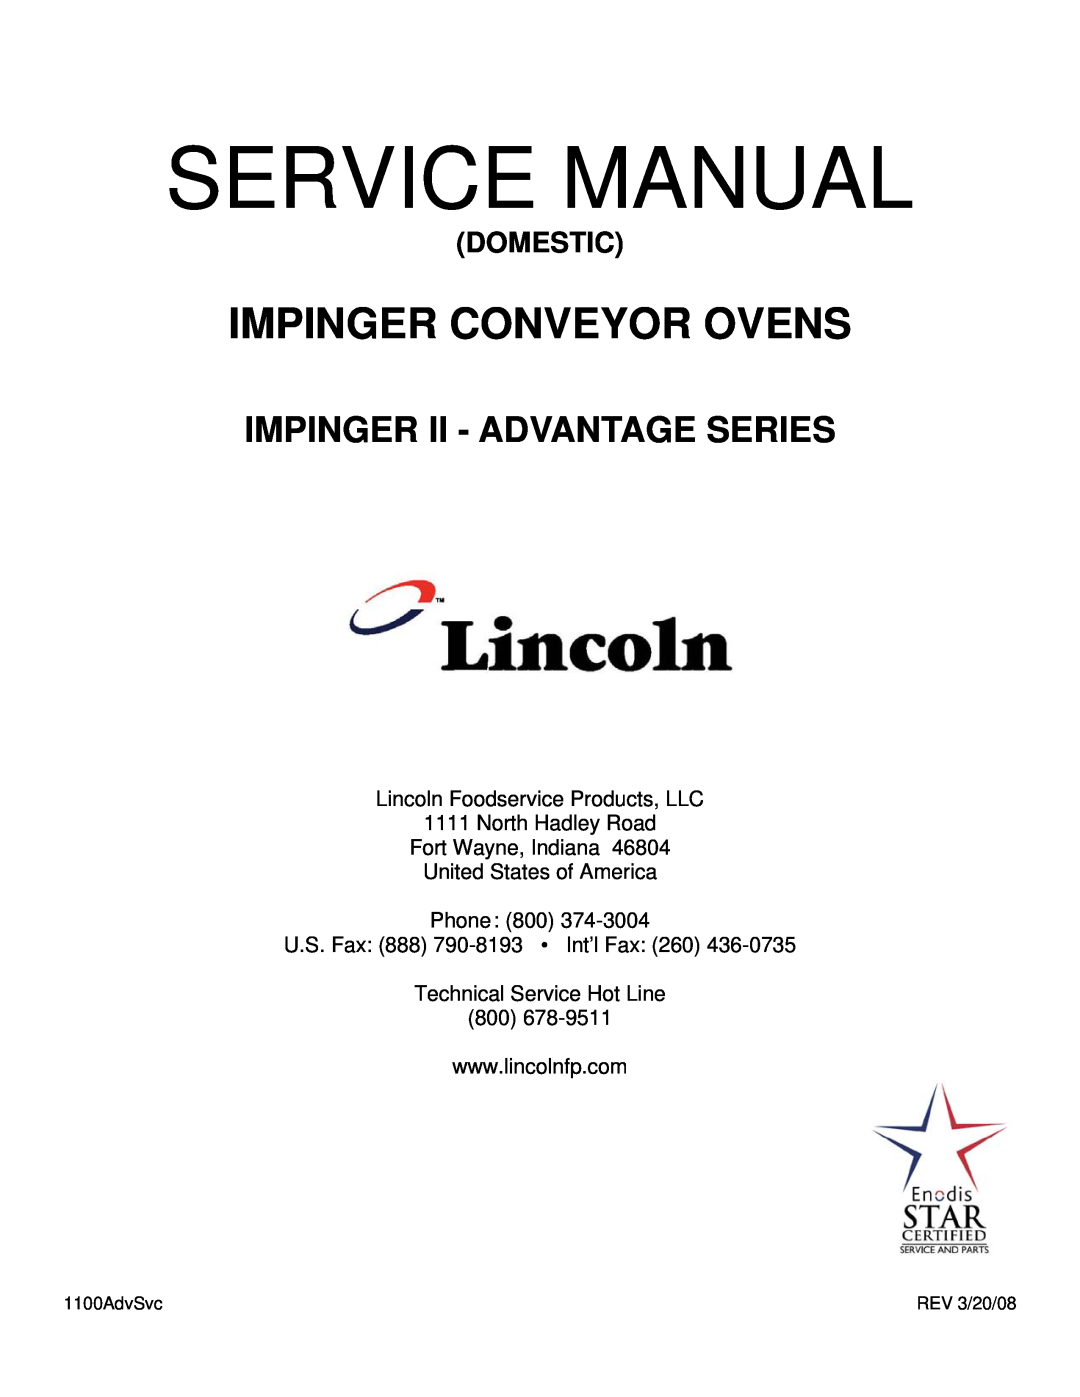 Lincoln II - Advantage Series service manual Lincoln Foodservice Products, LLC, North Hadley Road Fort Wayne, Indiana 